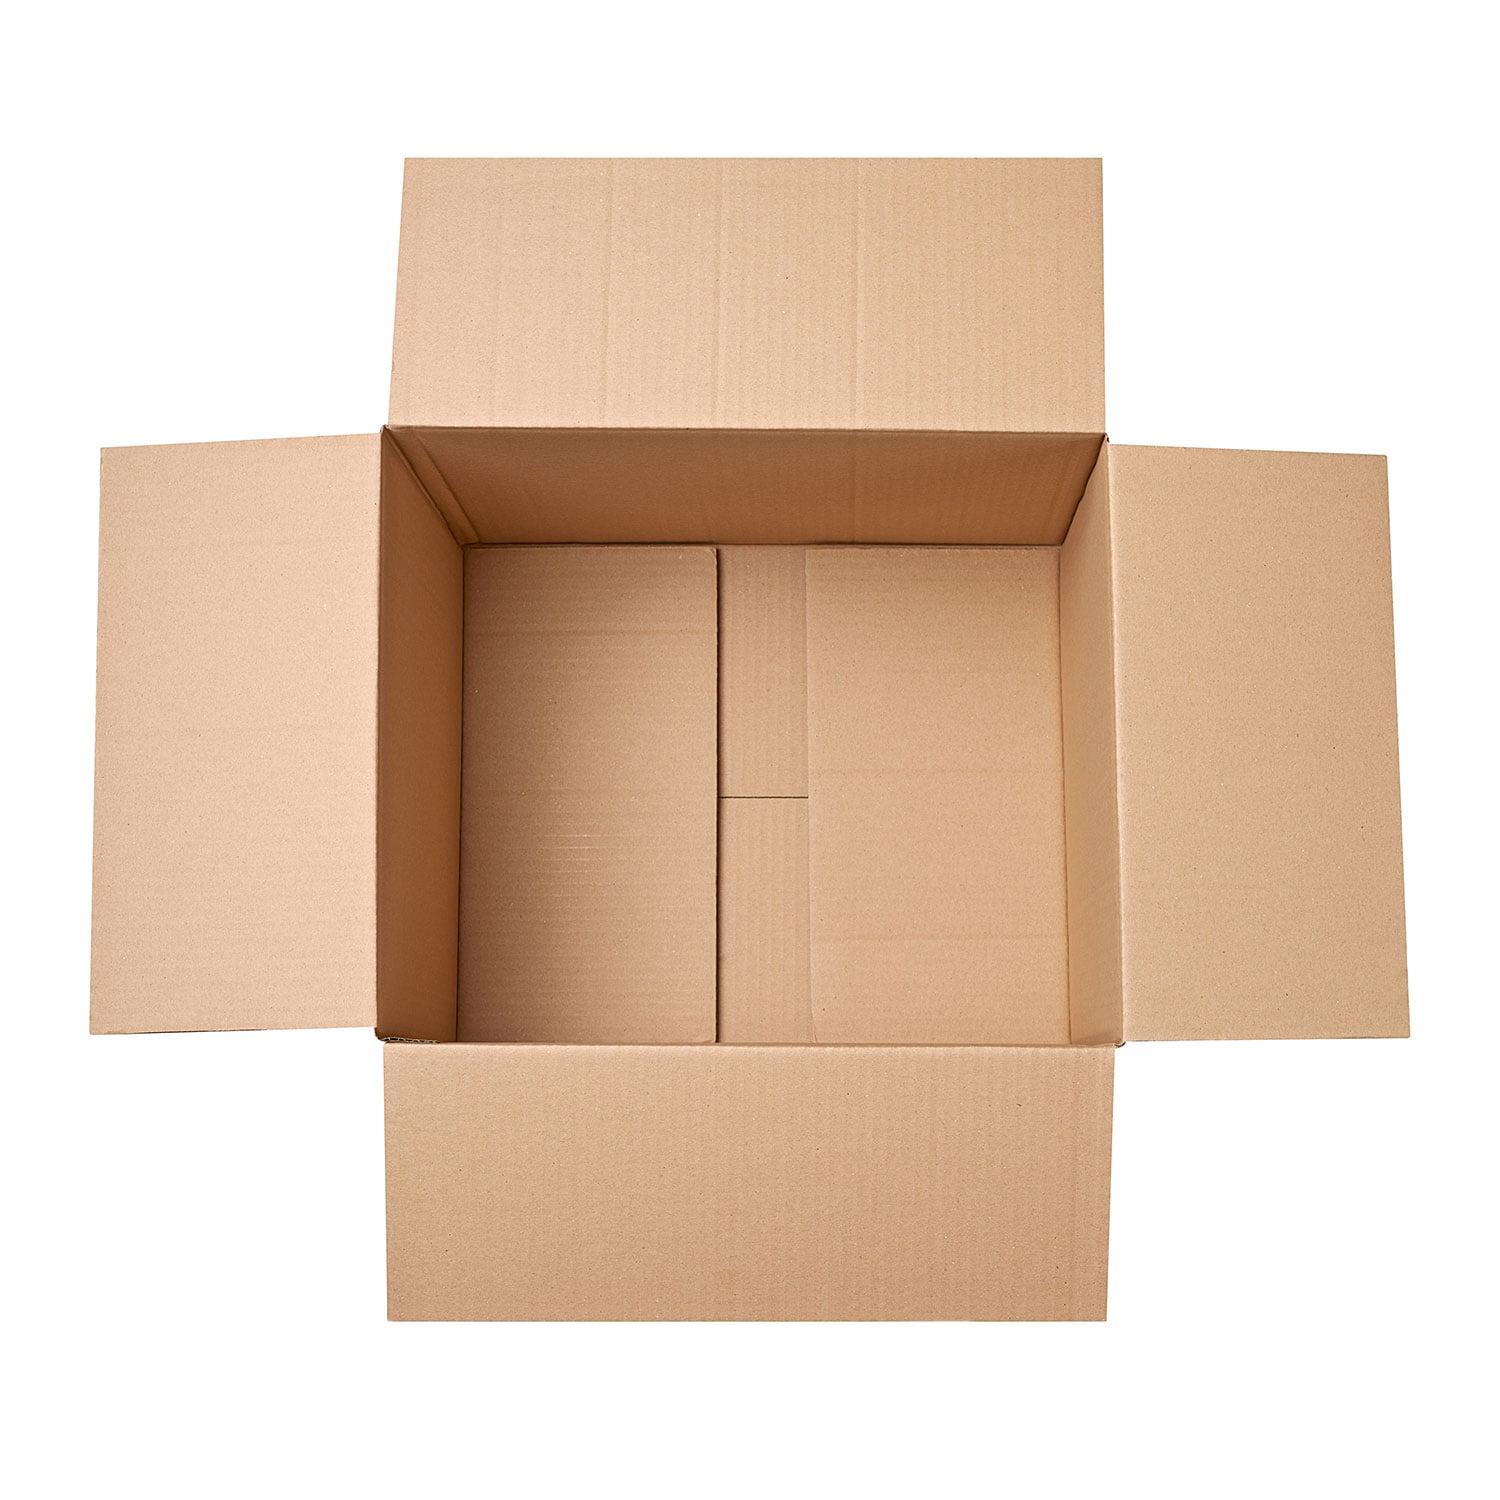 Single wall cardboard boxes